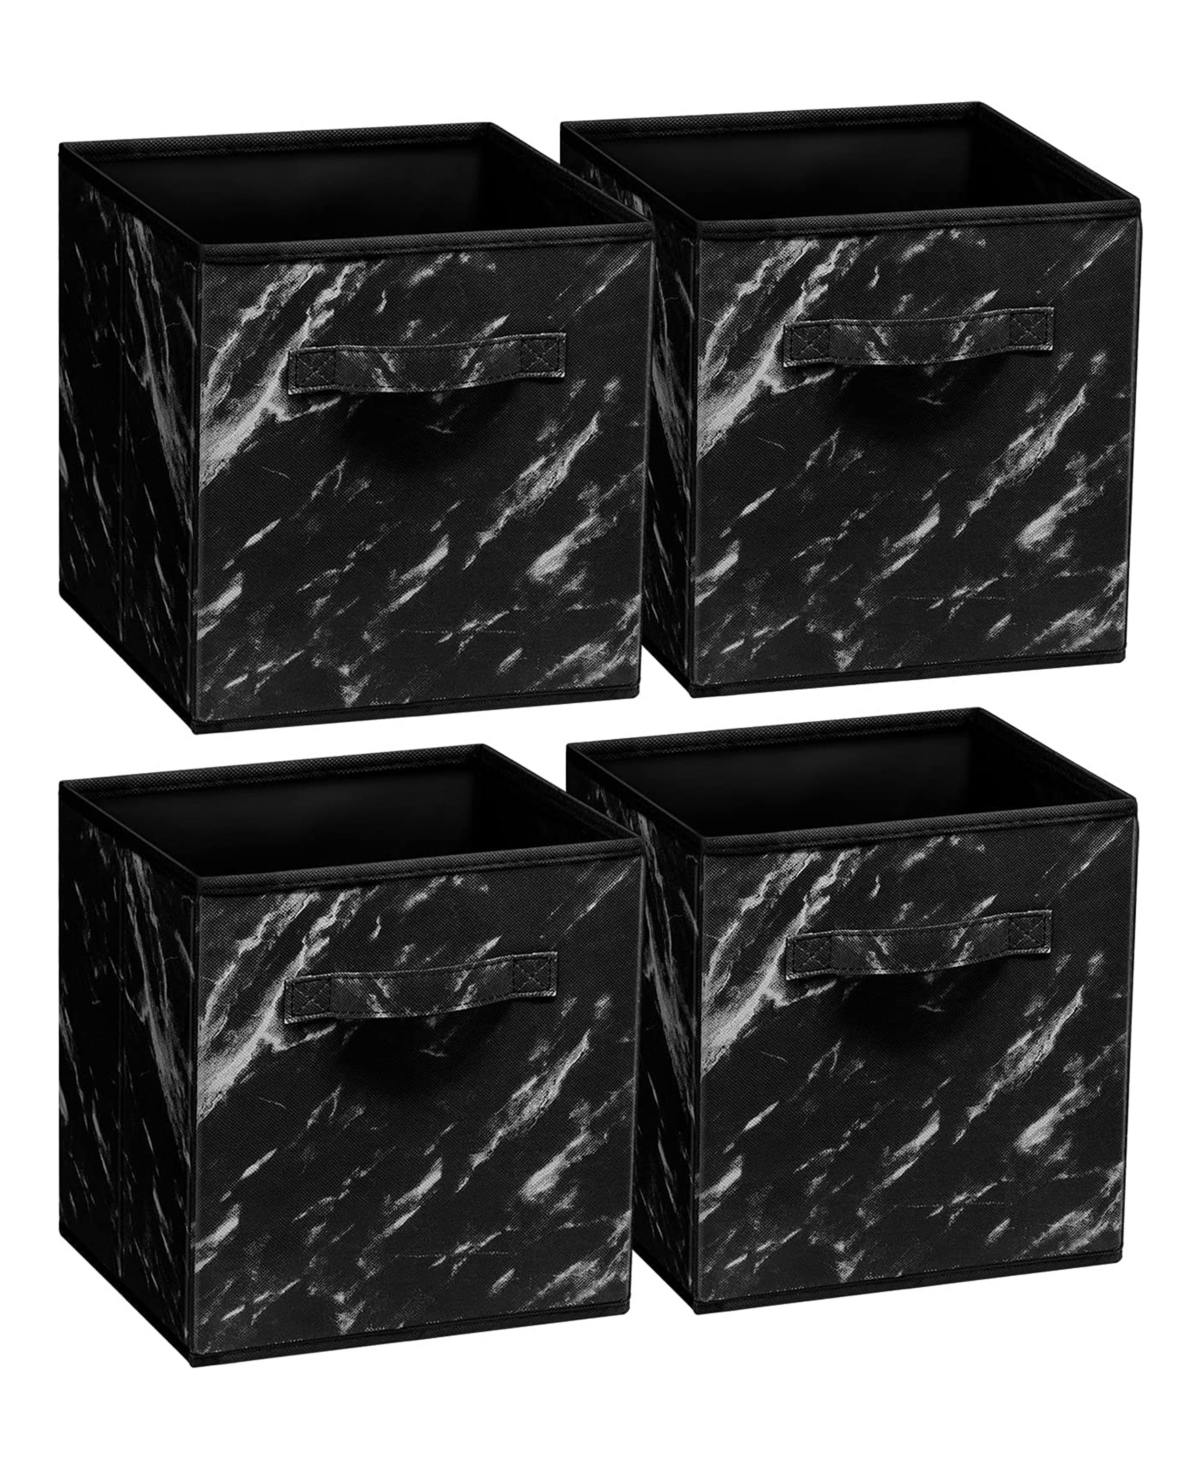 Foldable Storage Cube Bins, Set of 4 - Black